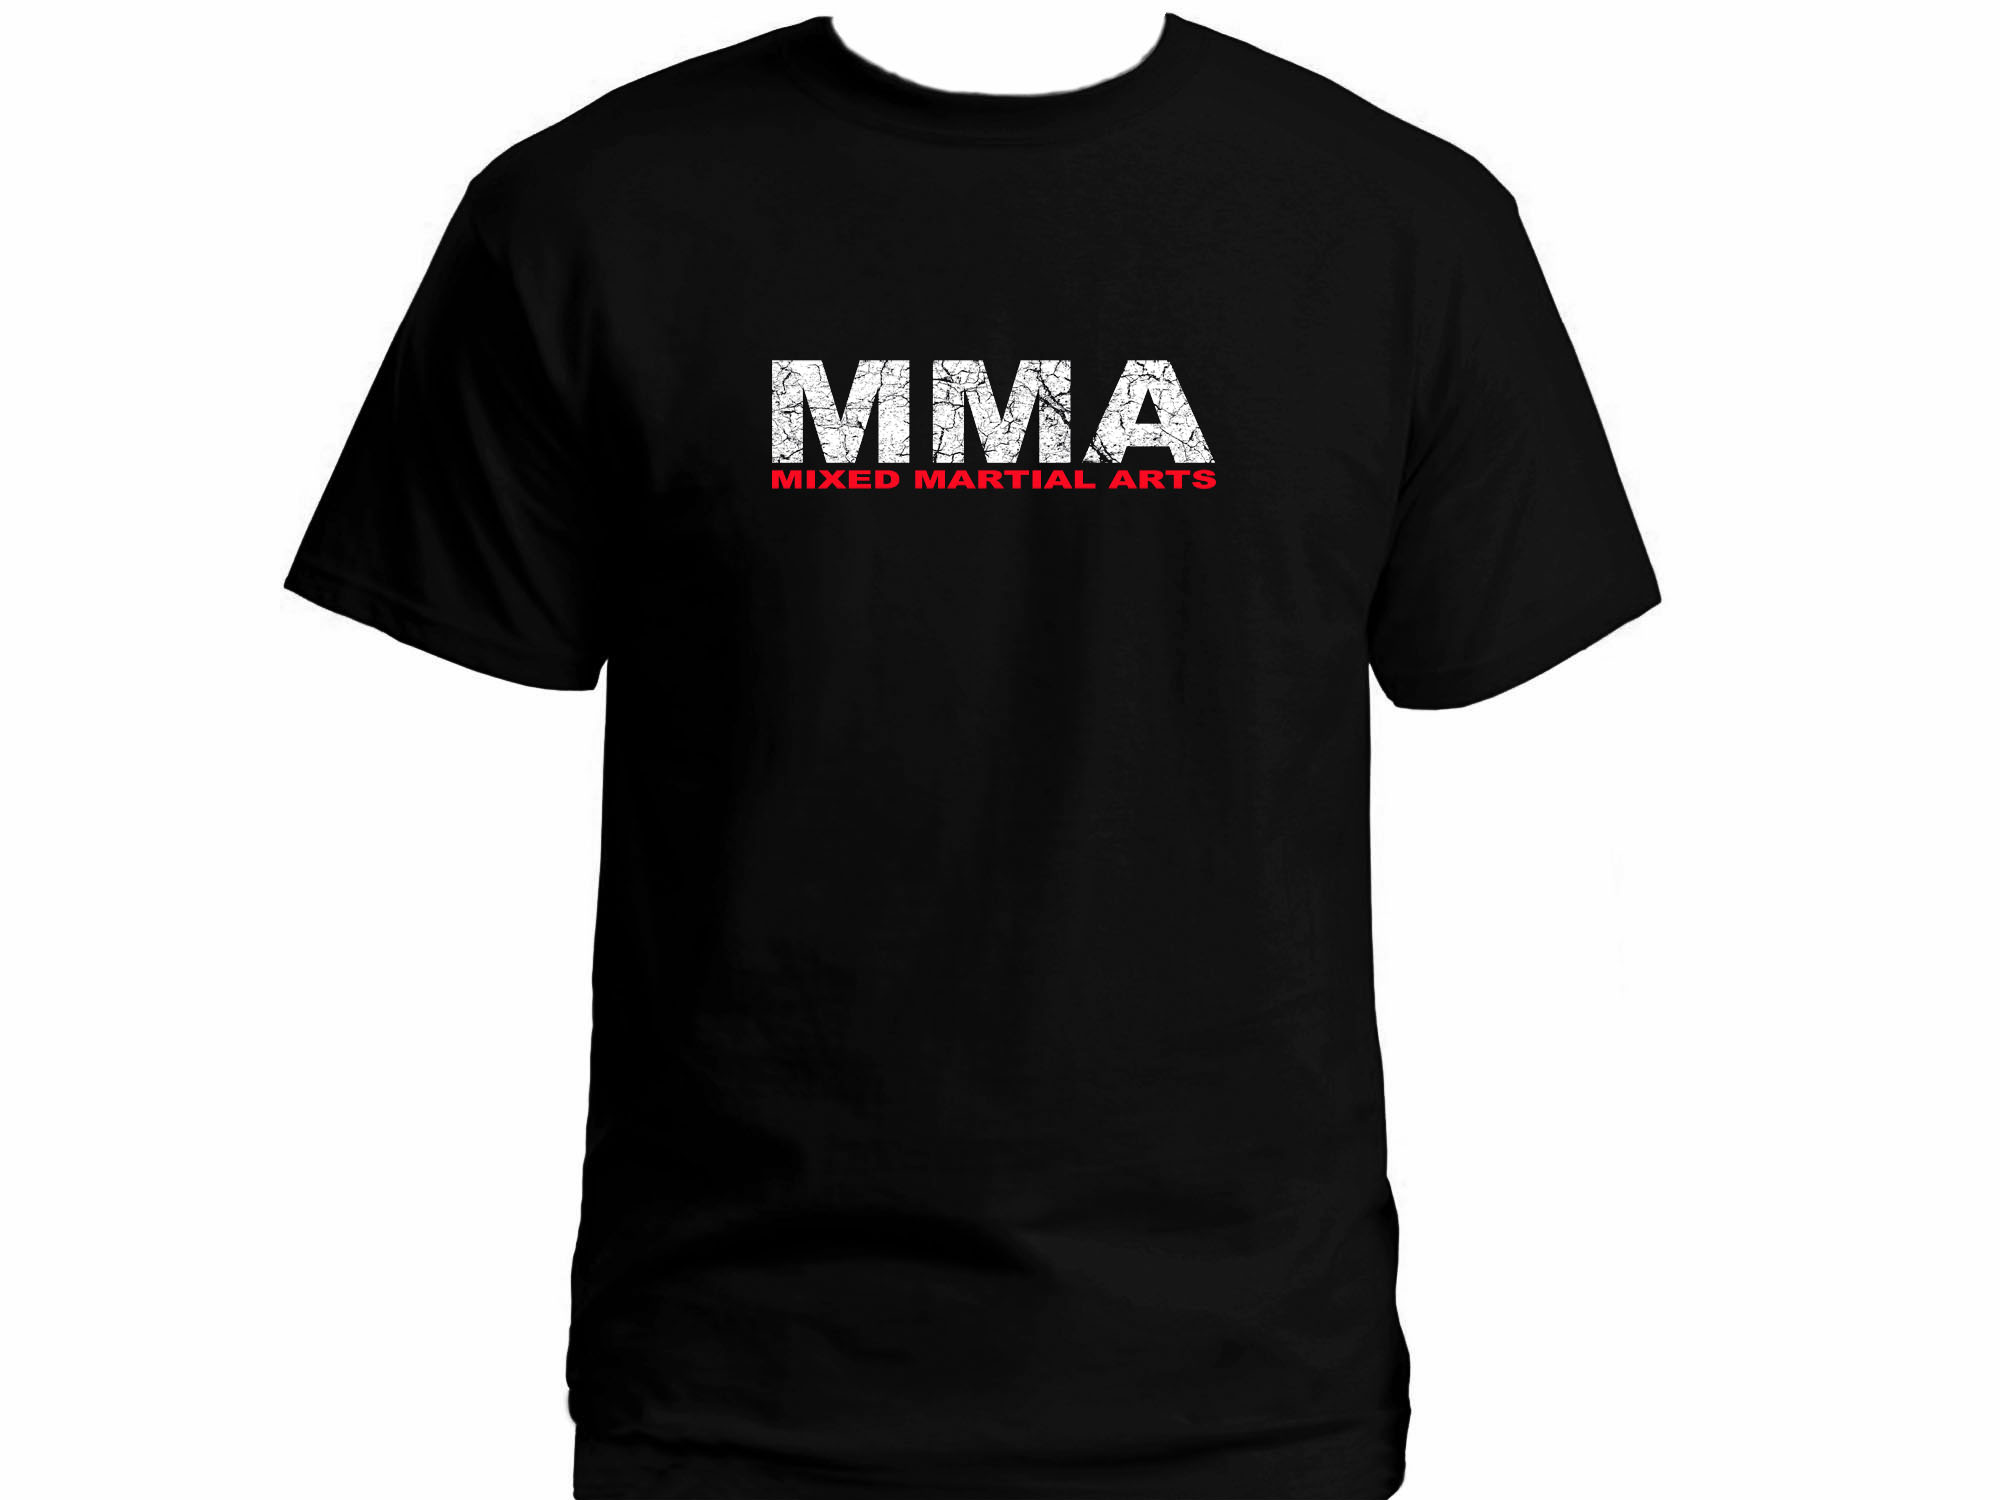 MMA mixed martial arts distressed look t-shirt